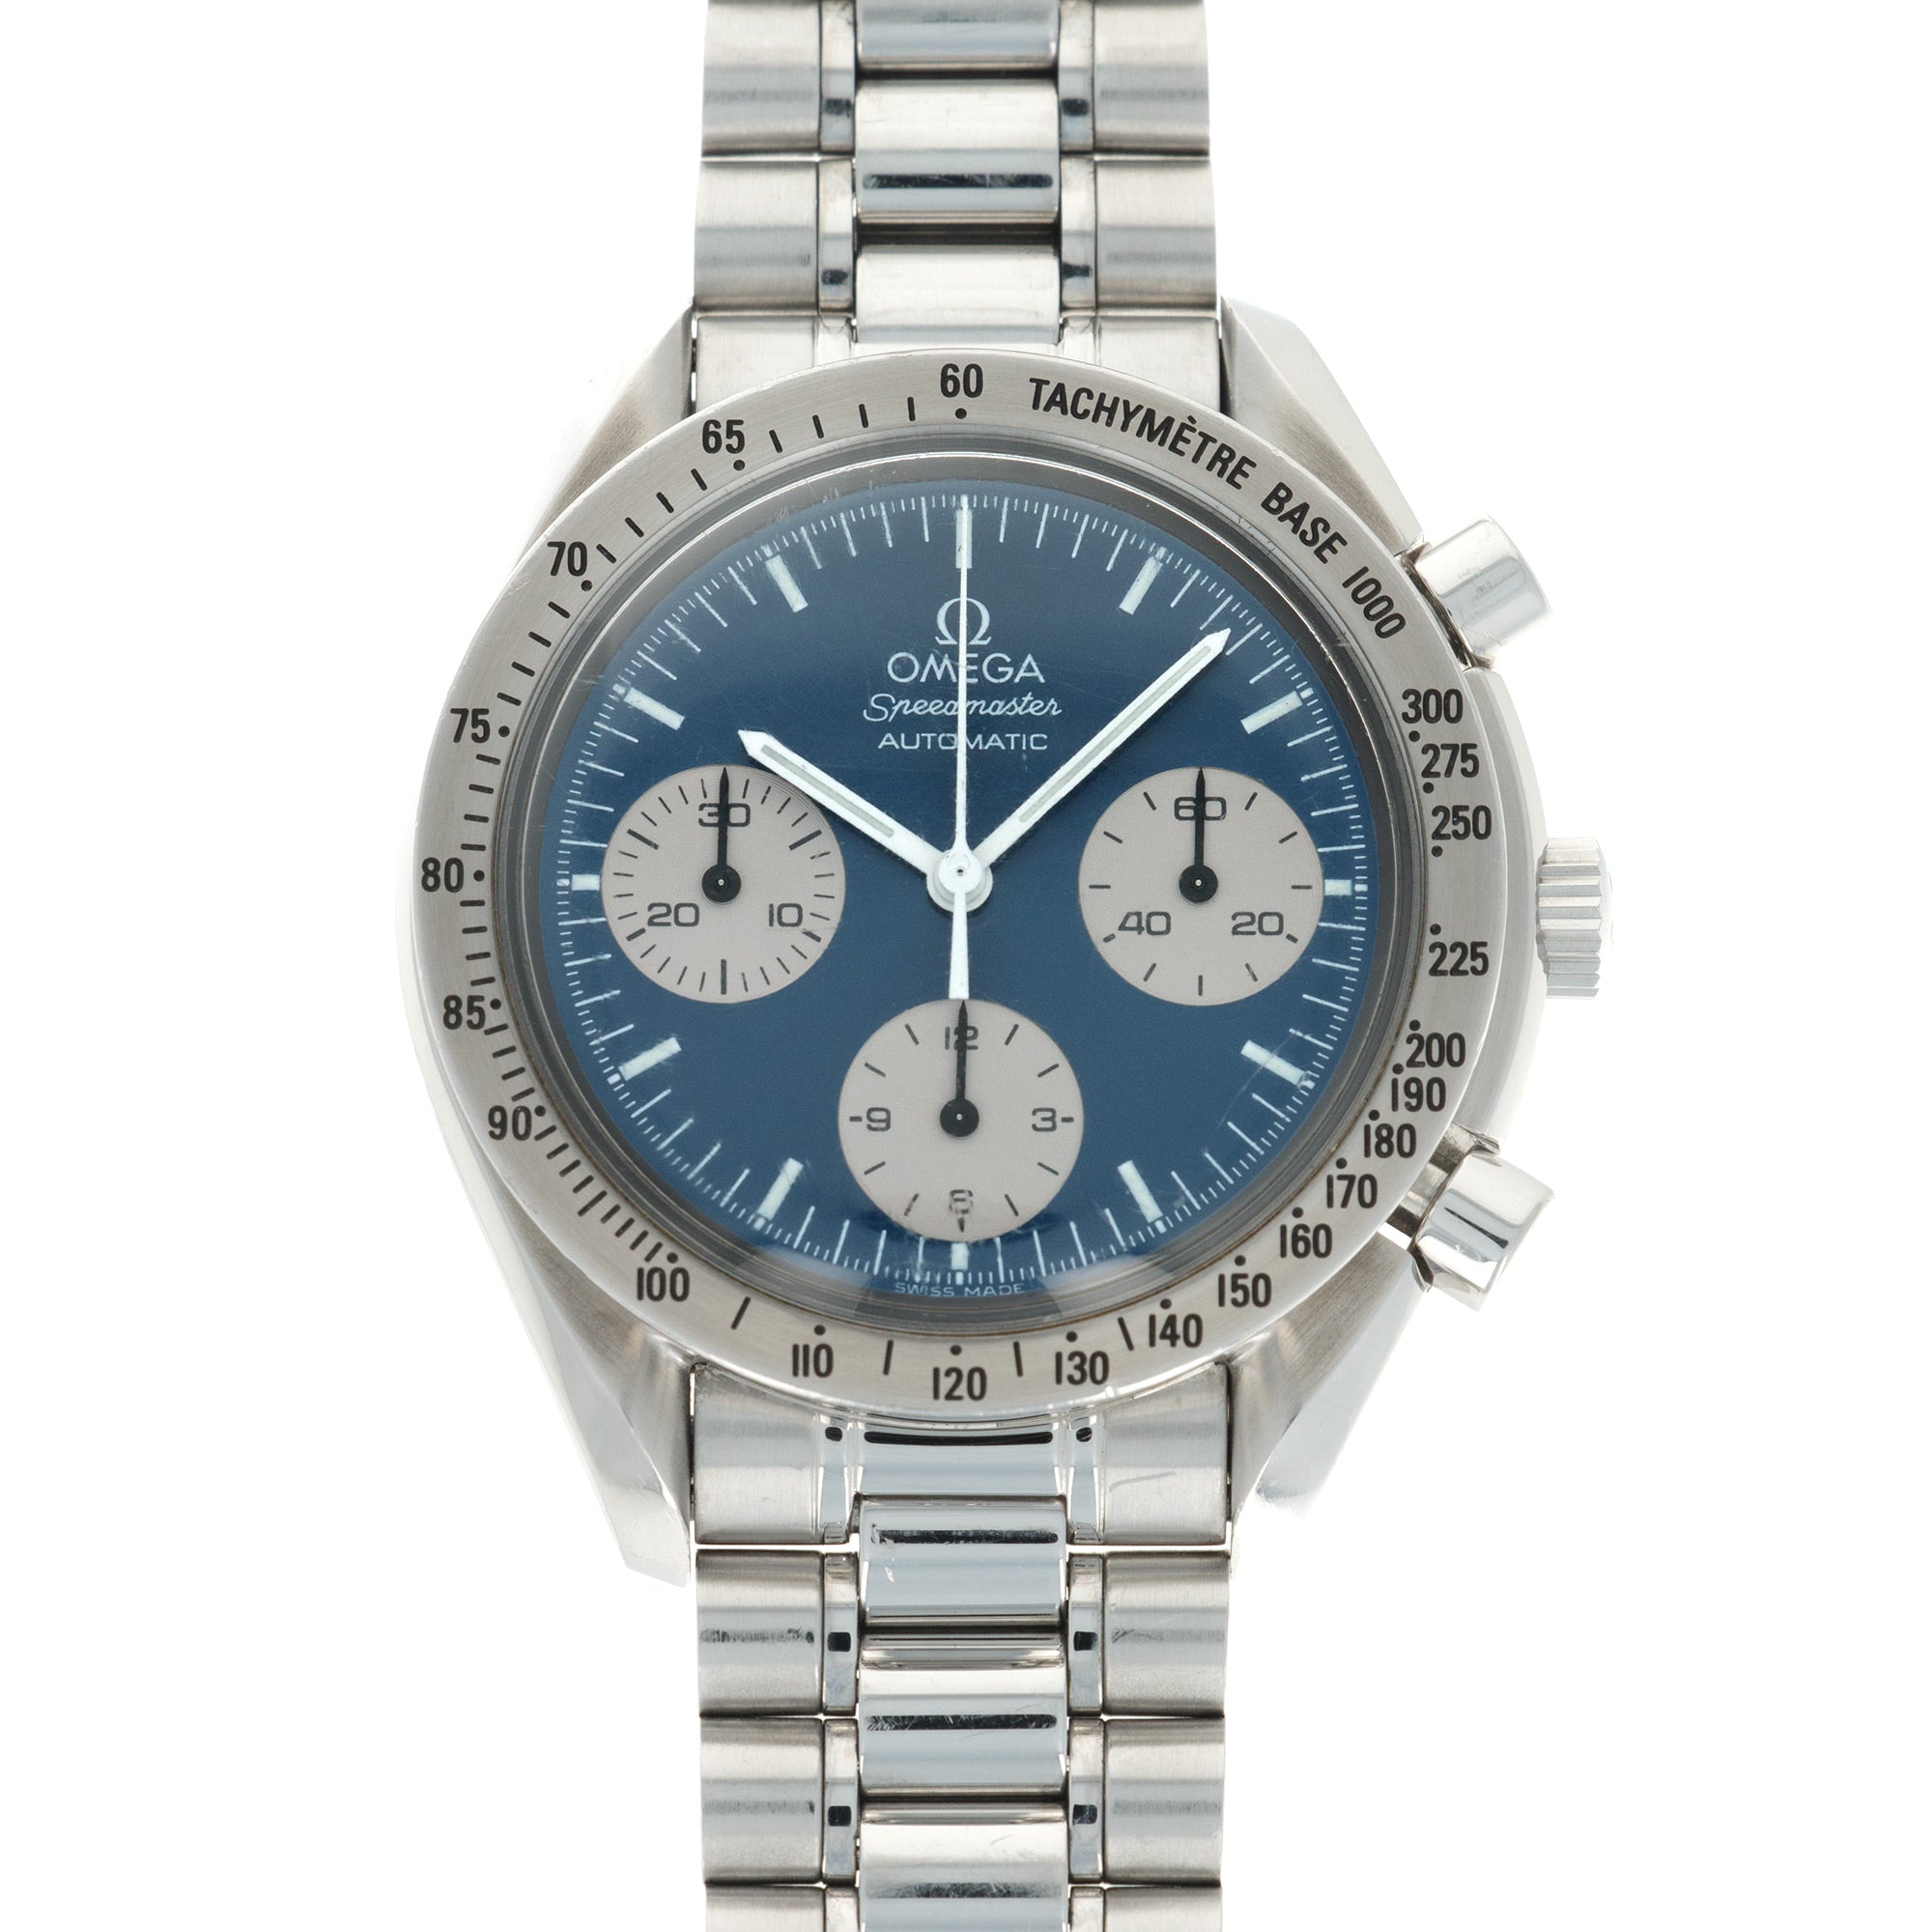 Omega - Omega Speedmaster Automatic Chronograph Watch Ref. 3510.82 - The Keystone Watches